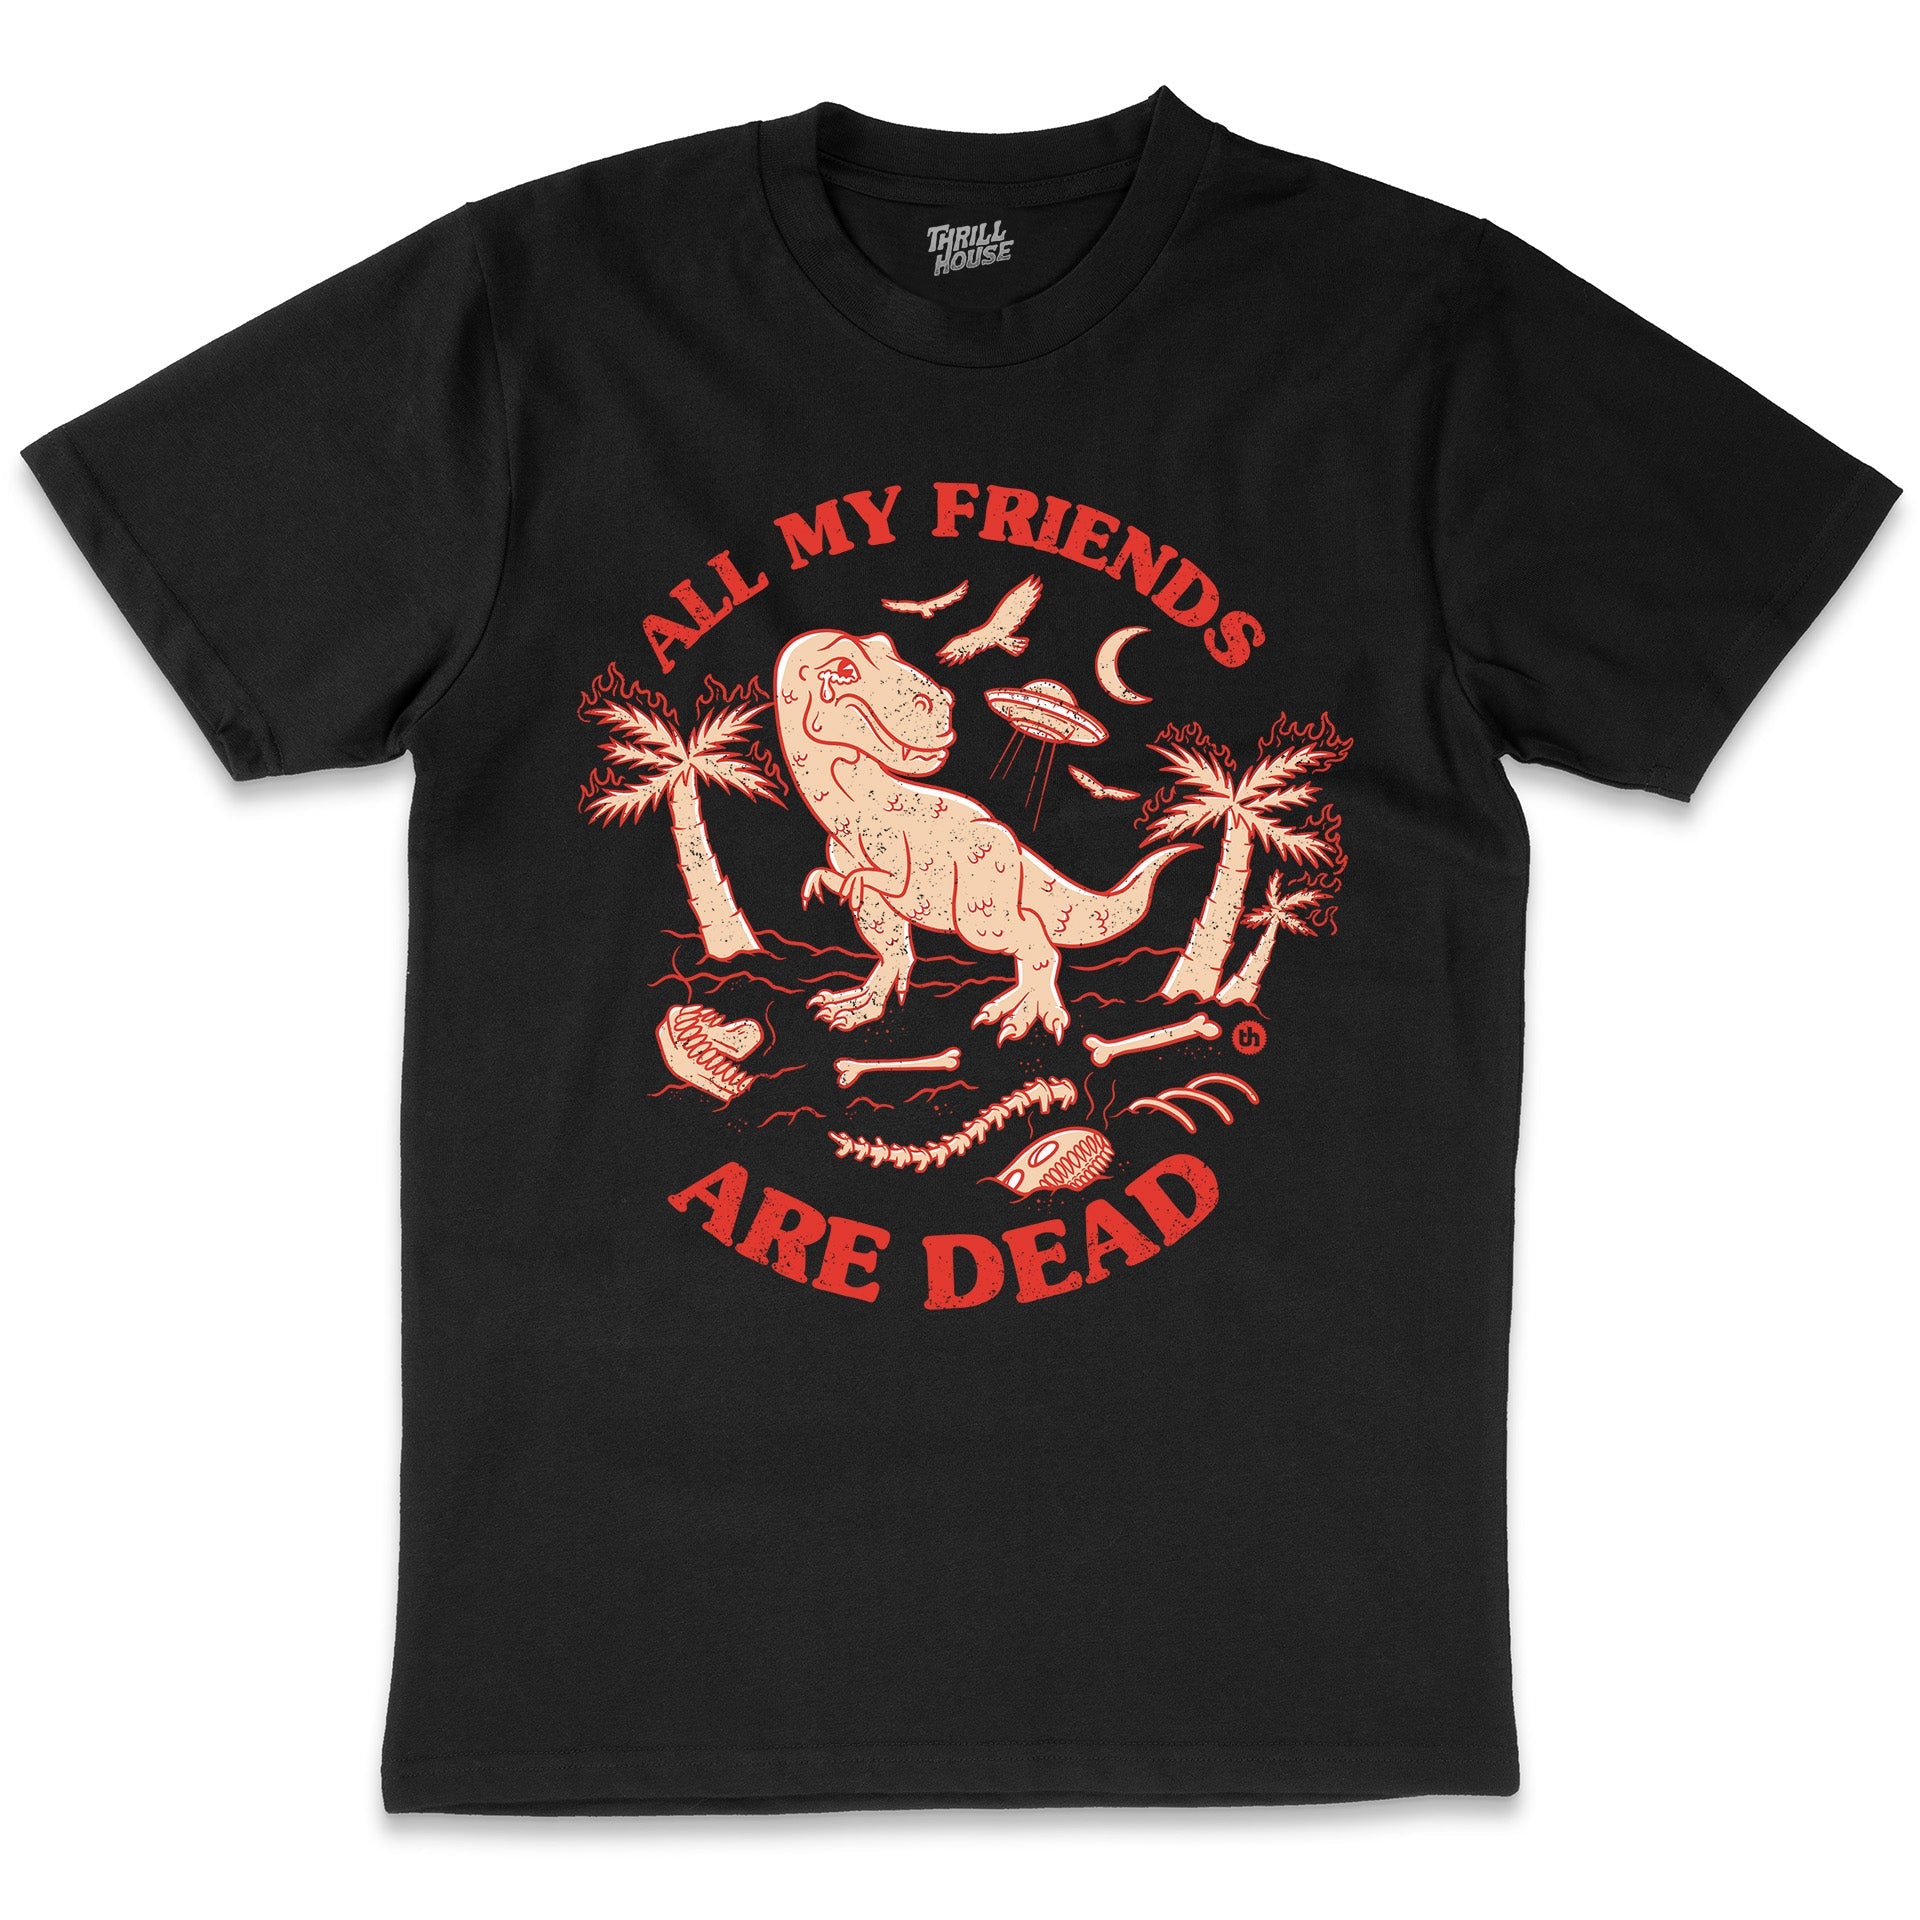 All My Friends are Dead Cool Dinosaur Jurassic Era Prehistoric Comet Earth Funny Slogan Cotton T-Shirt